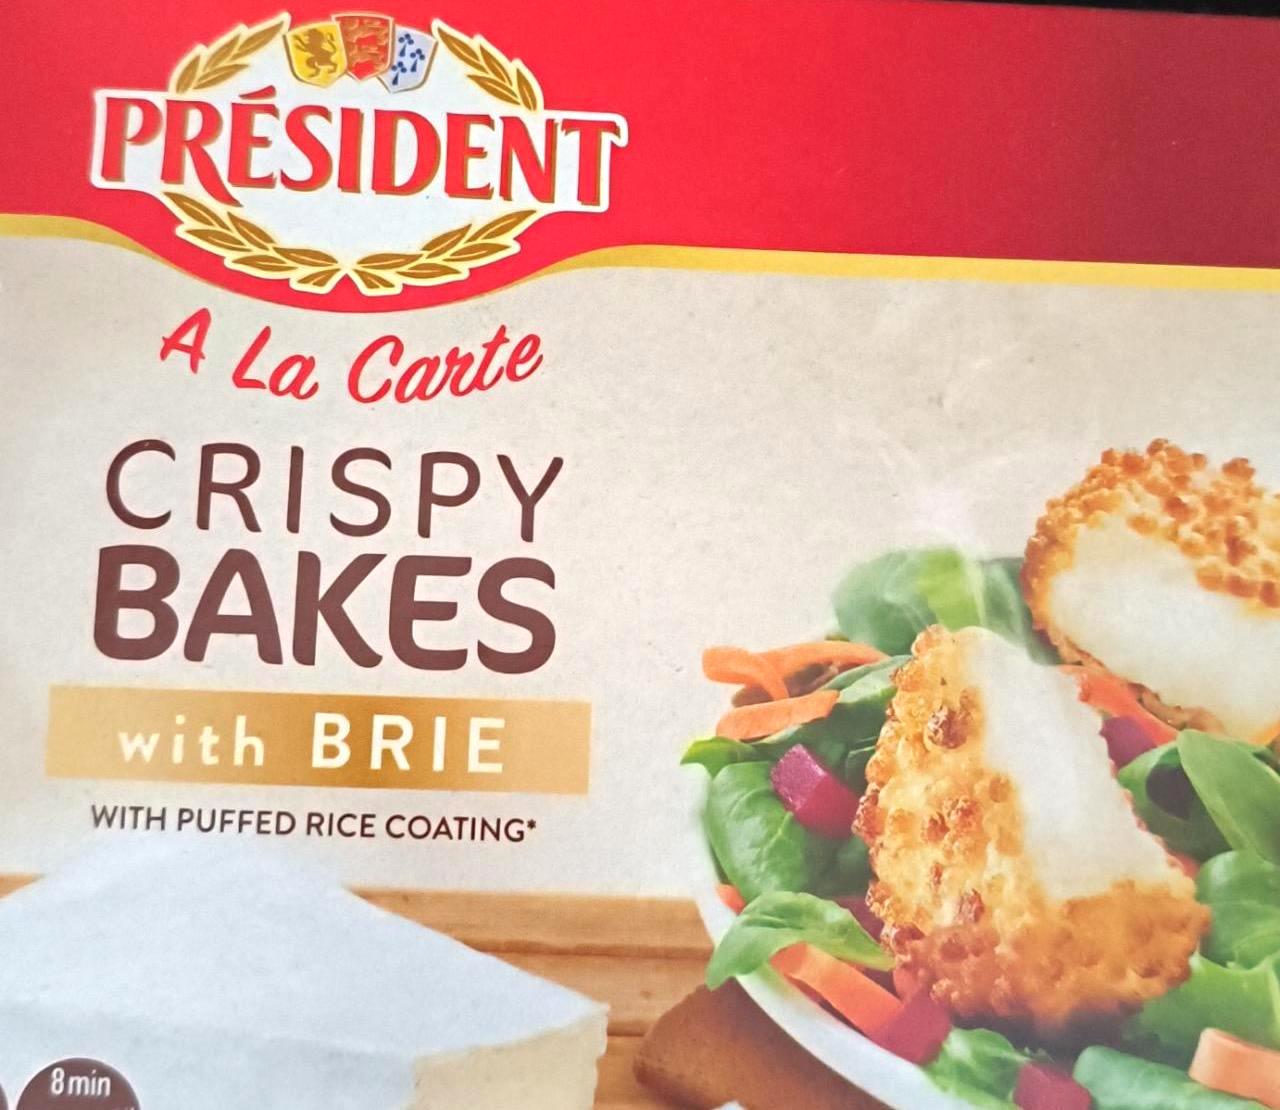 Képek - Crispy bakes with brie Président